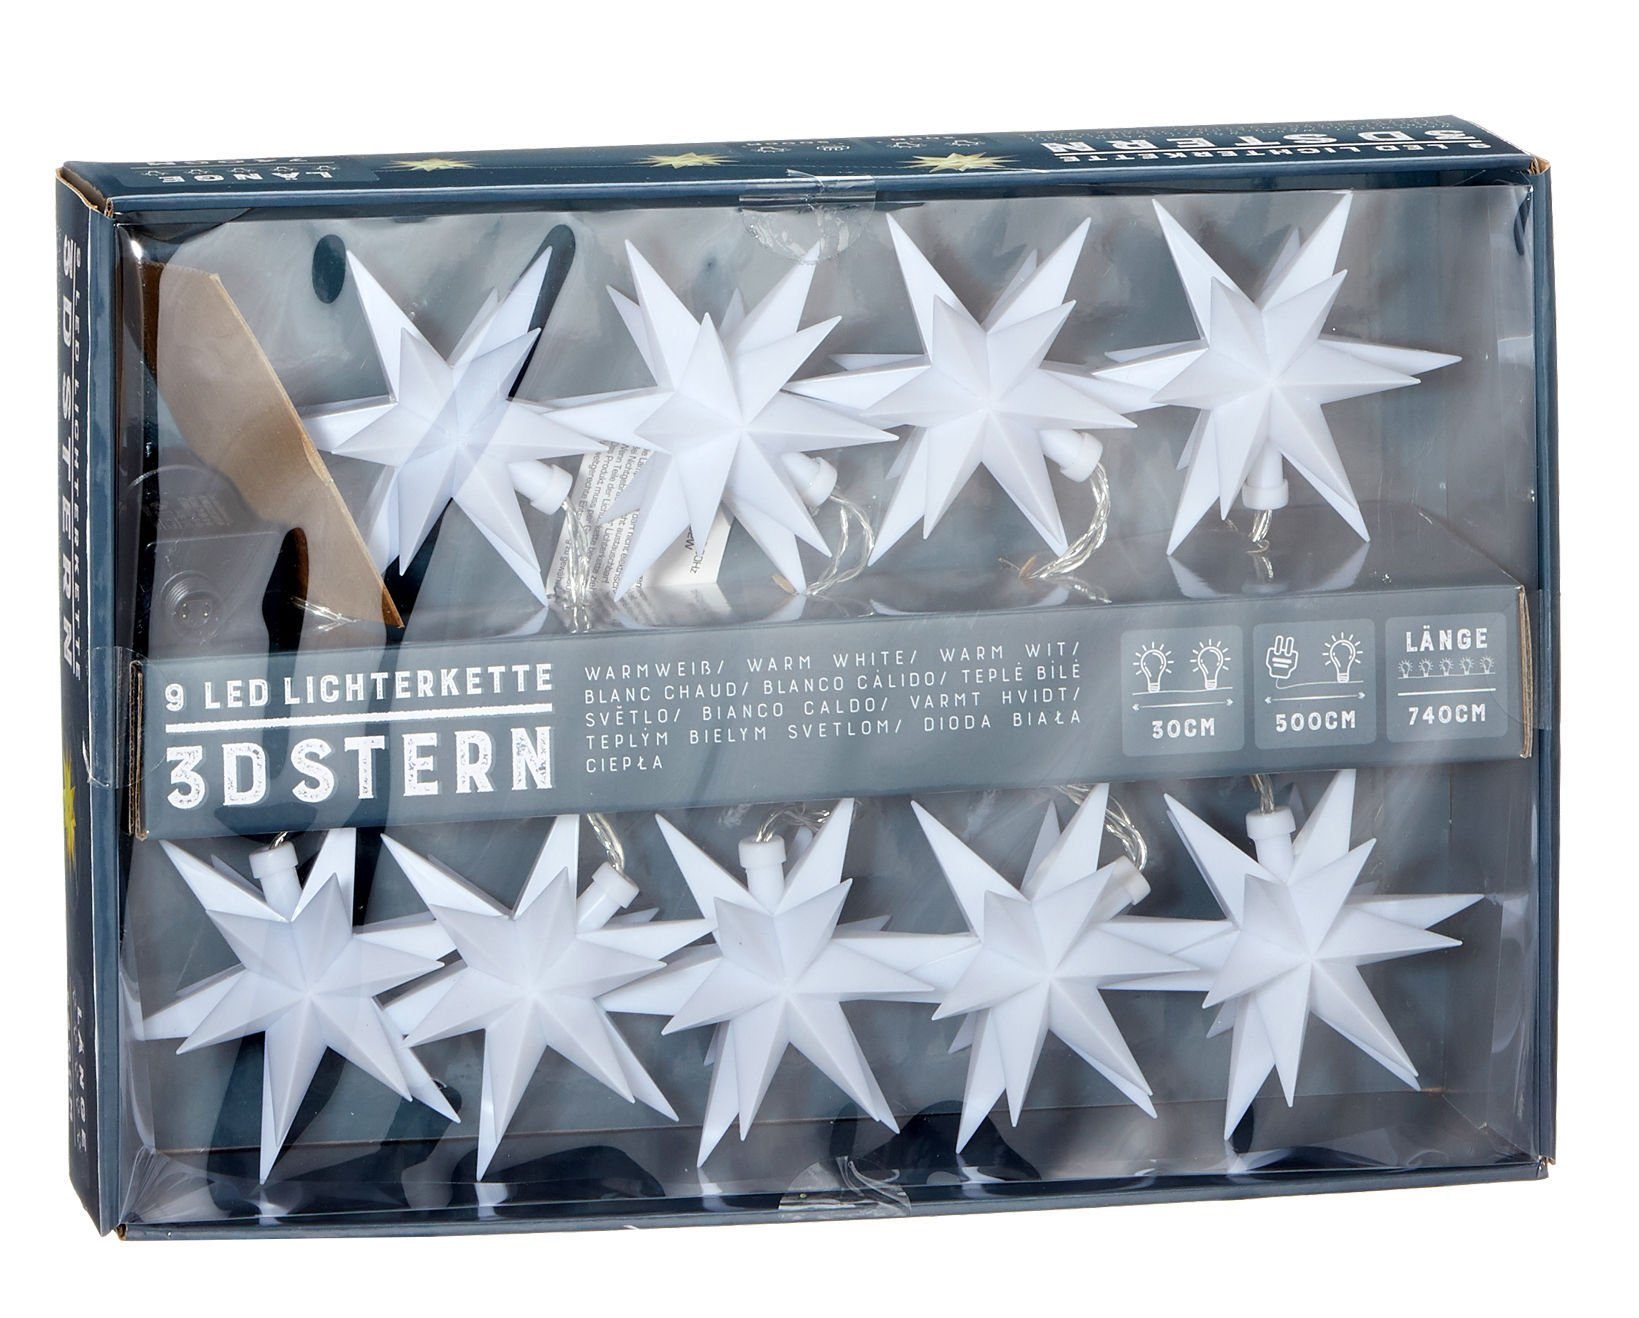 Spetebo LED-Girlande 3D Stern Lichterkette mit 9 LED - Sterne in weiß, 9 Sterne